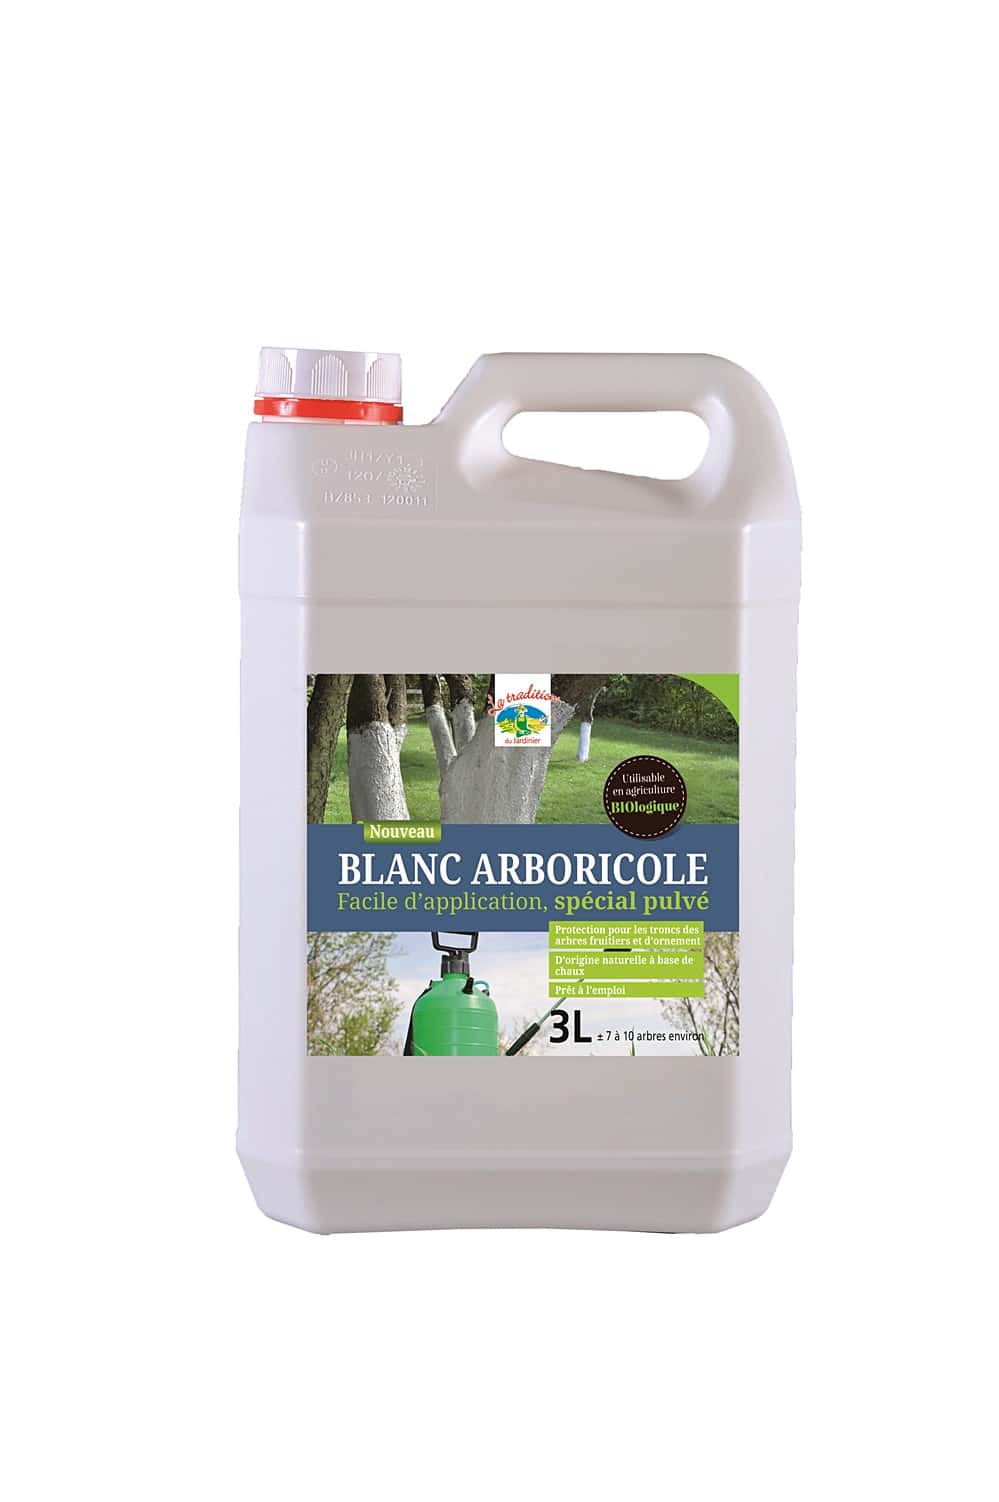 Blanc arboricole 3l pulvérisable - Mr.Bricolage